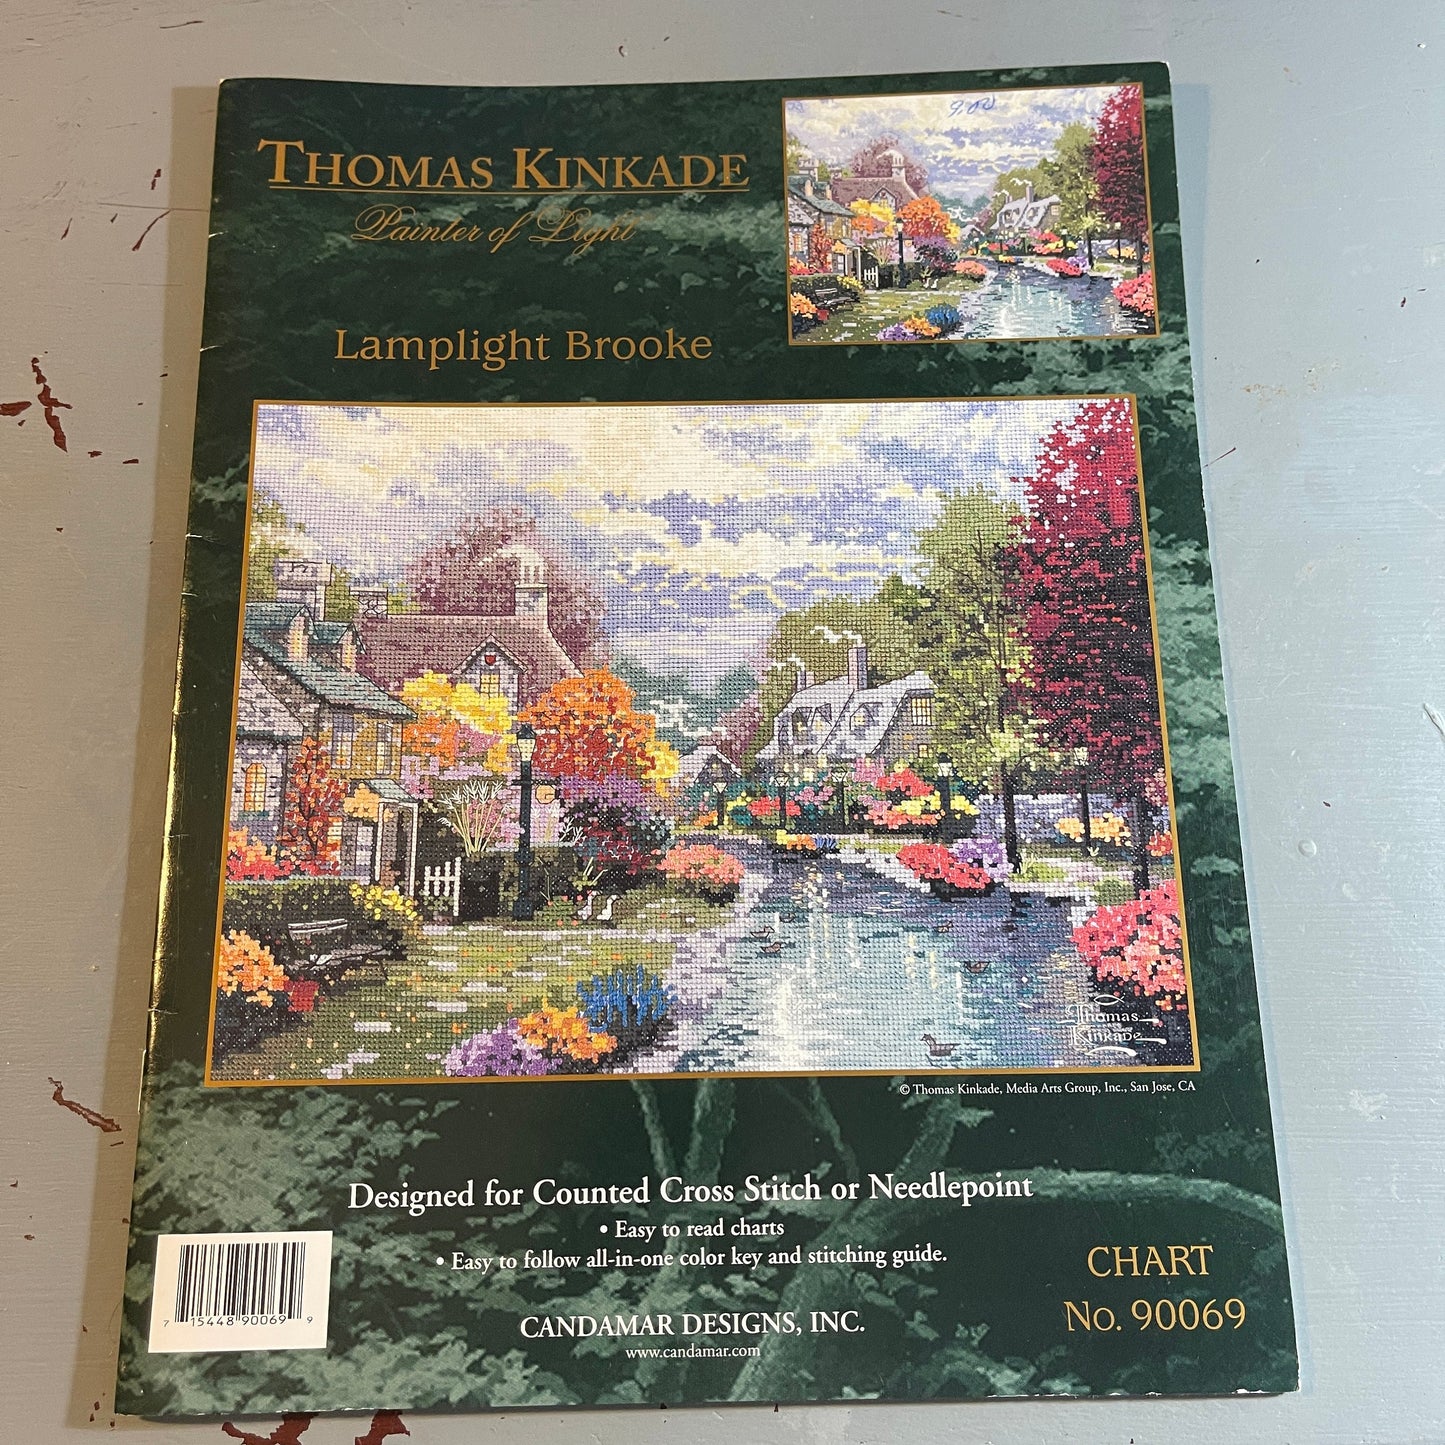 Thomas Kinkade, Painter of Light, Lamplight Brooke, 90069, Vintage, Counted Cross Stitch, or Needlepoint Chart*